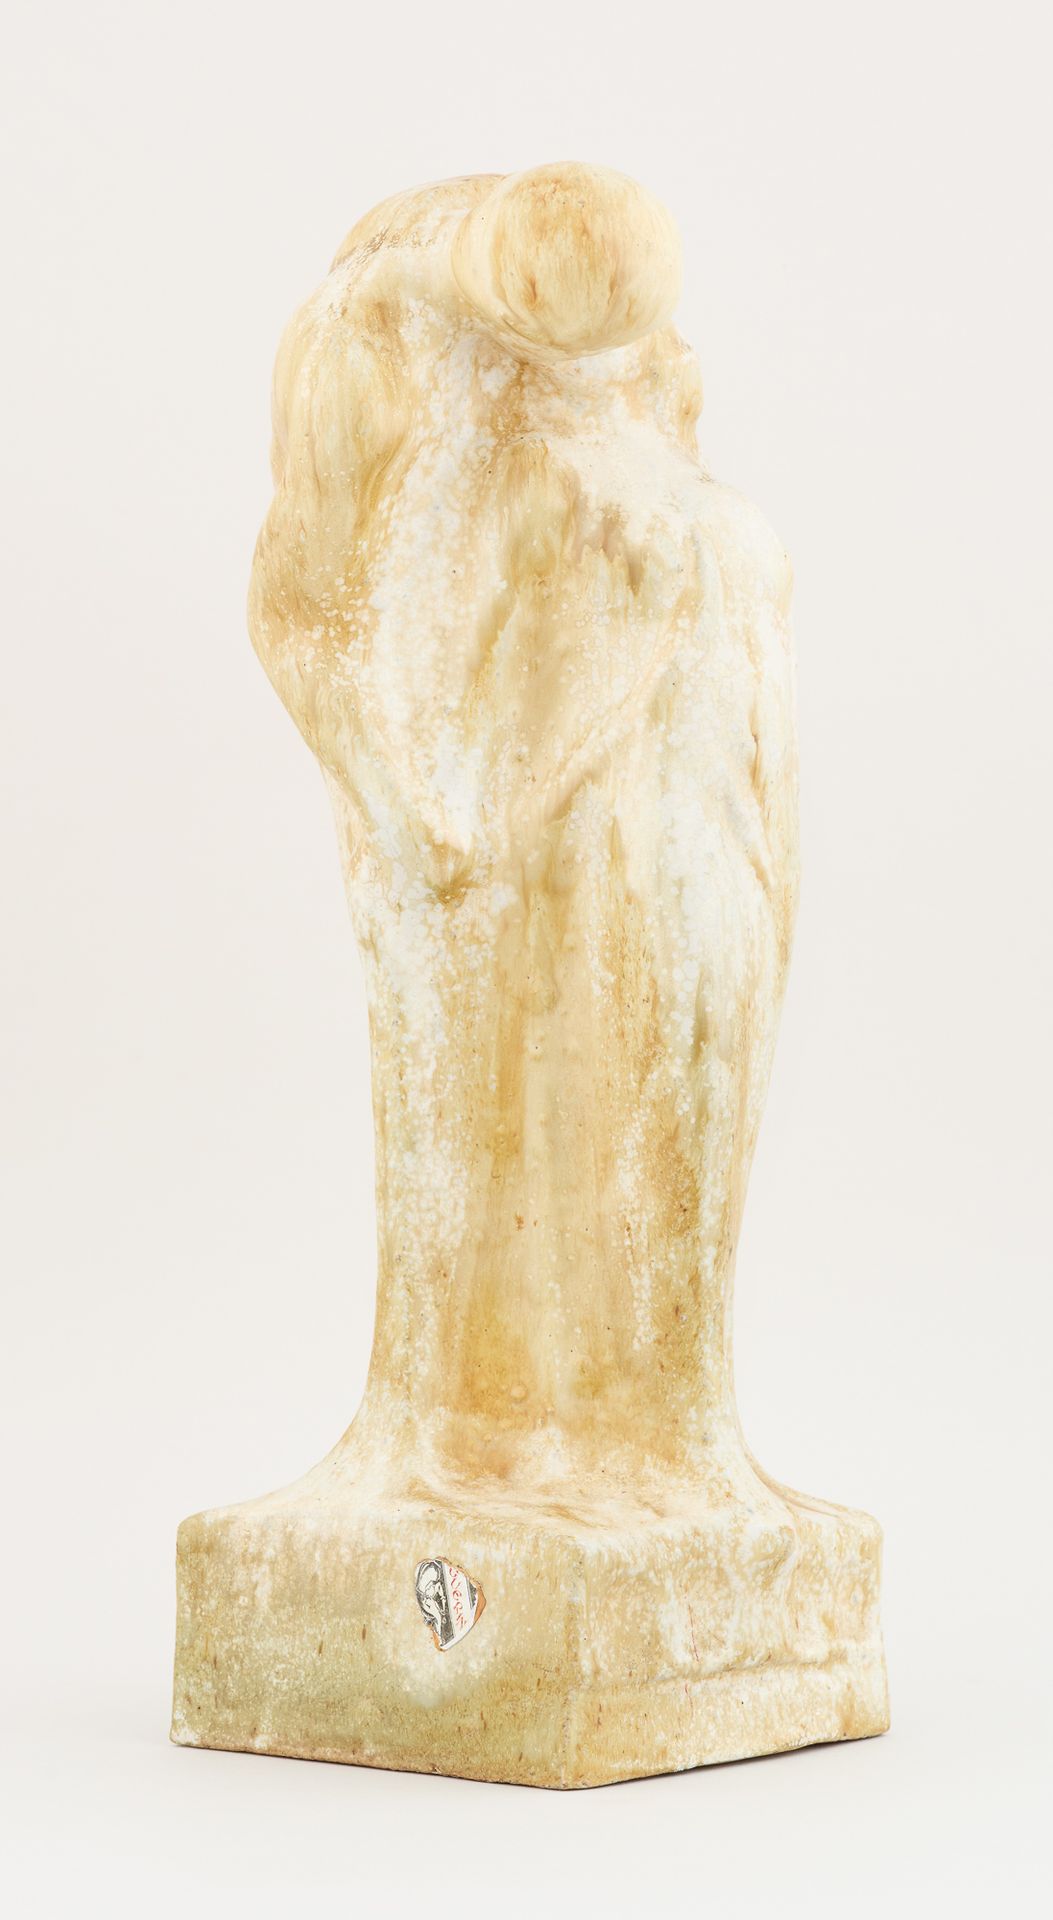 Roger GUERIN École belge (1896-1954) 陶瓷：釉面石膏雕塑 "吻"。

作品内有签名：Guérin。

尺寸：高：47厘米。